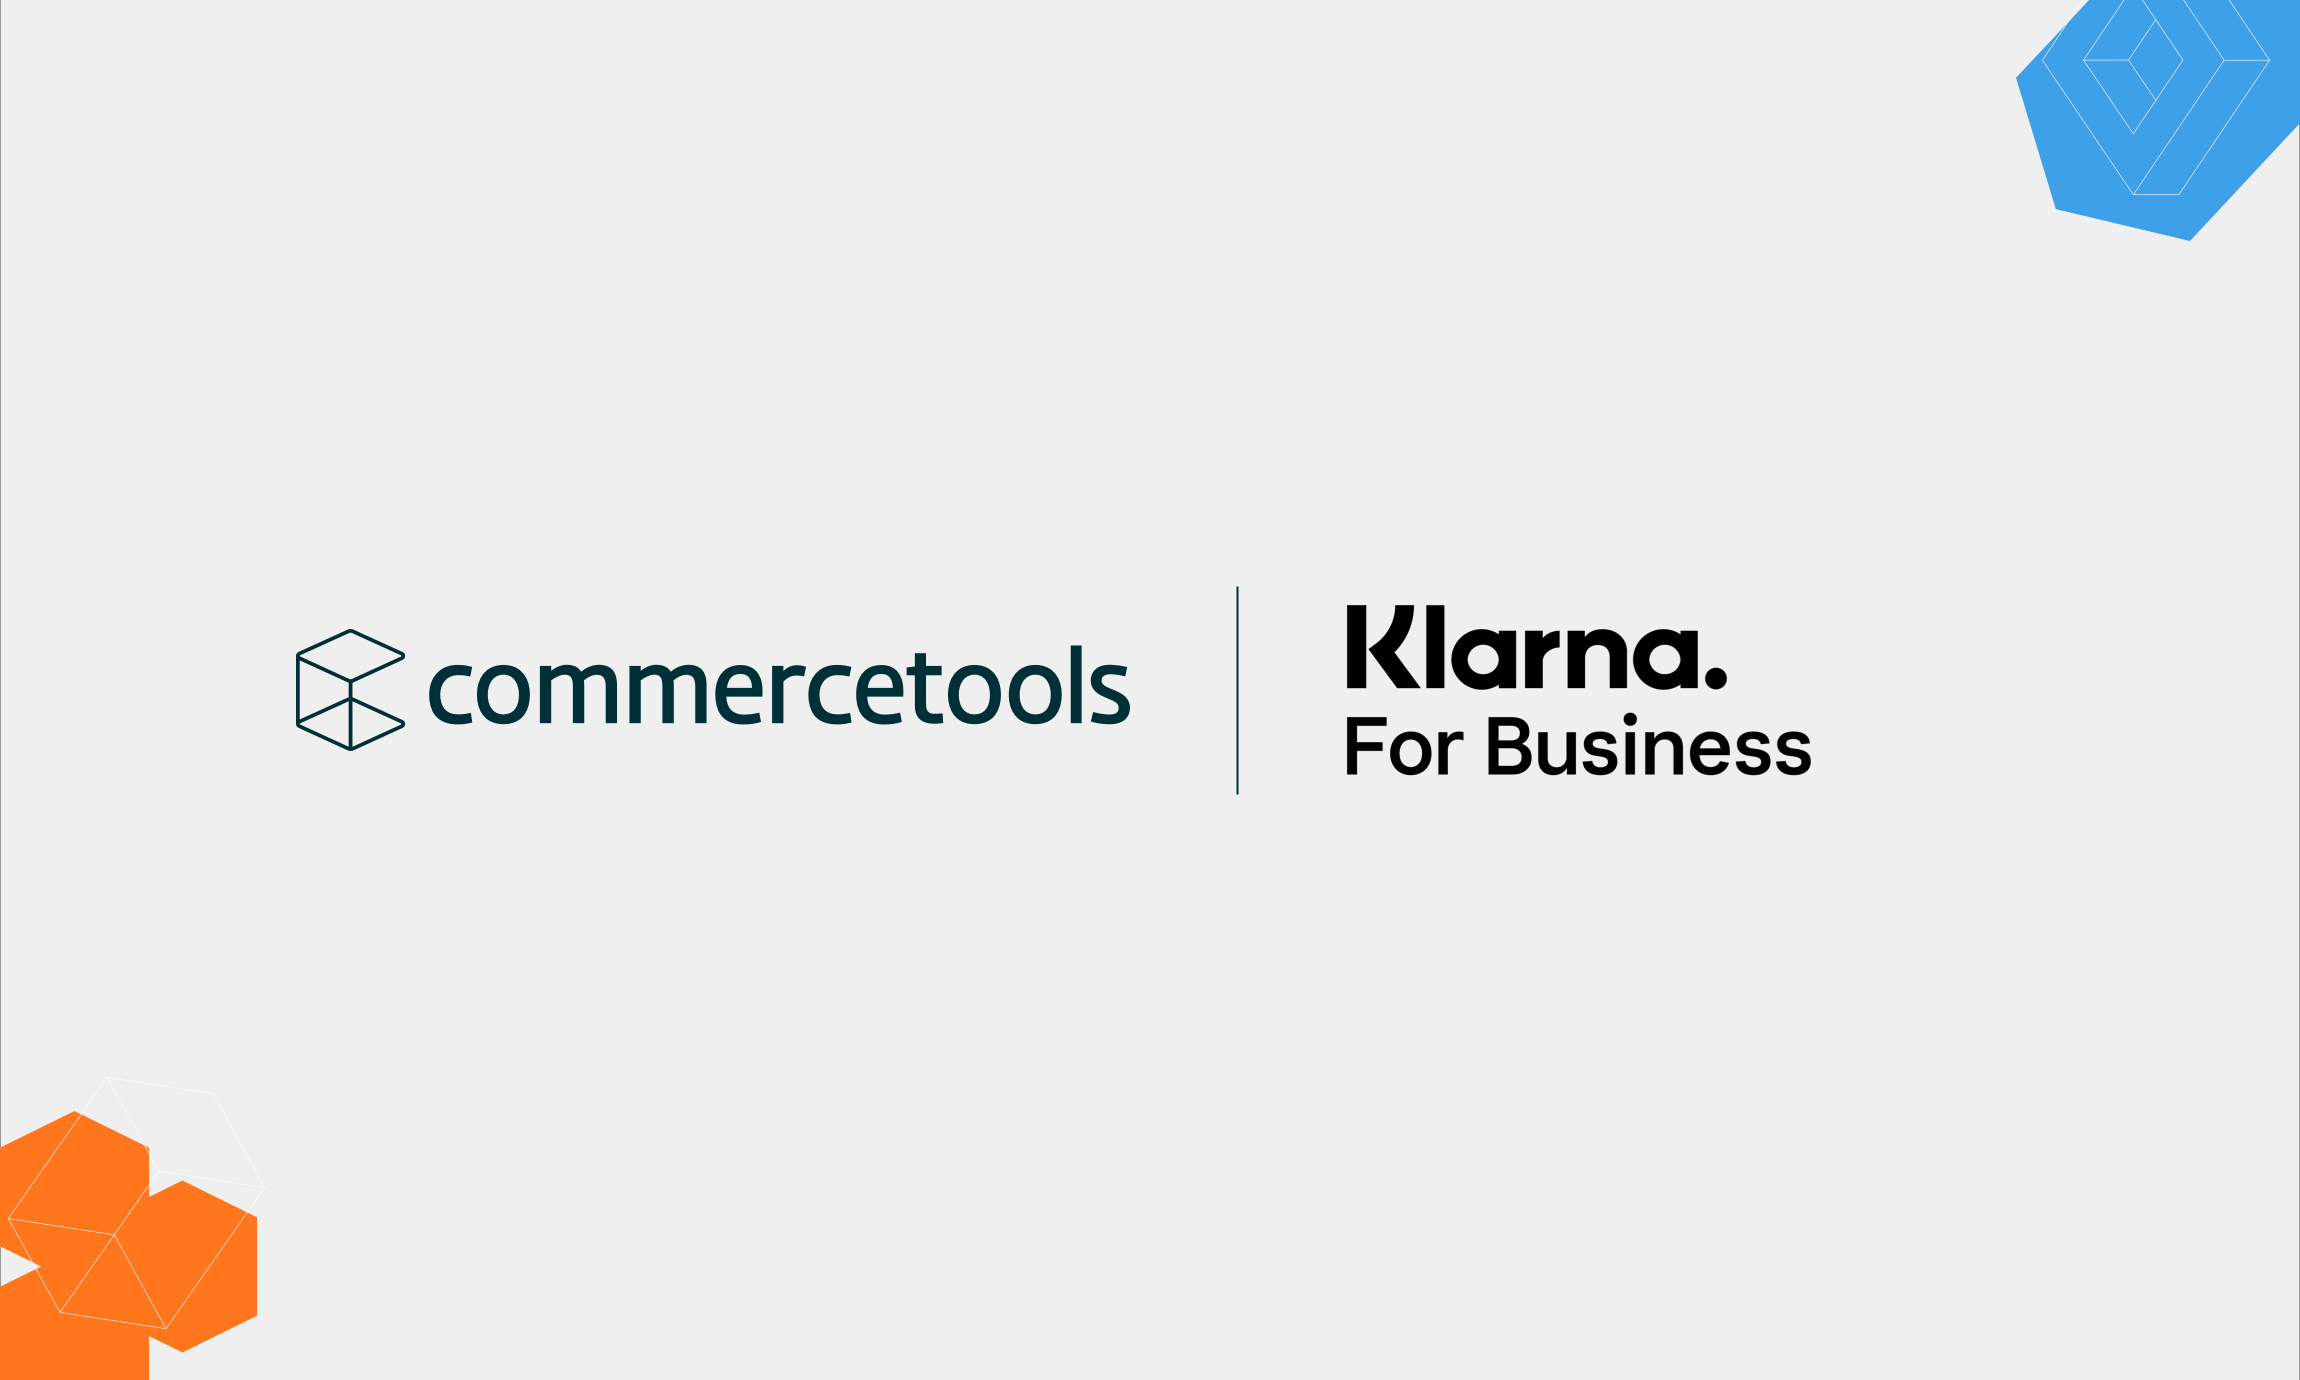 commercetools and Klarna begin new partnership